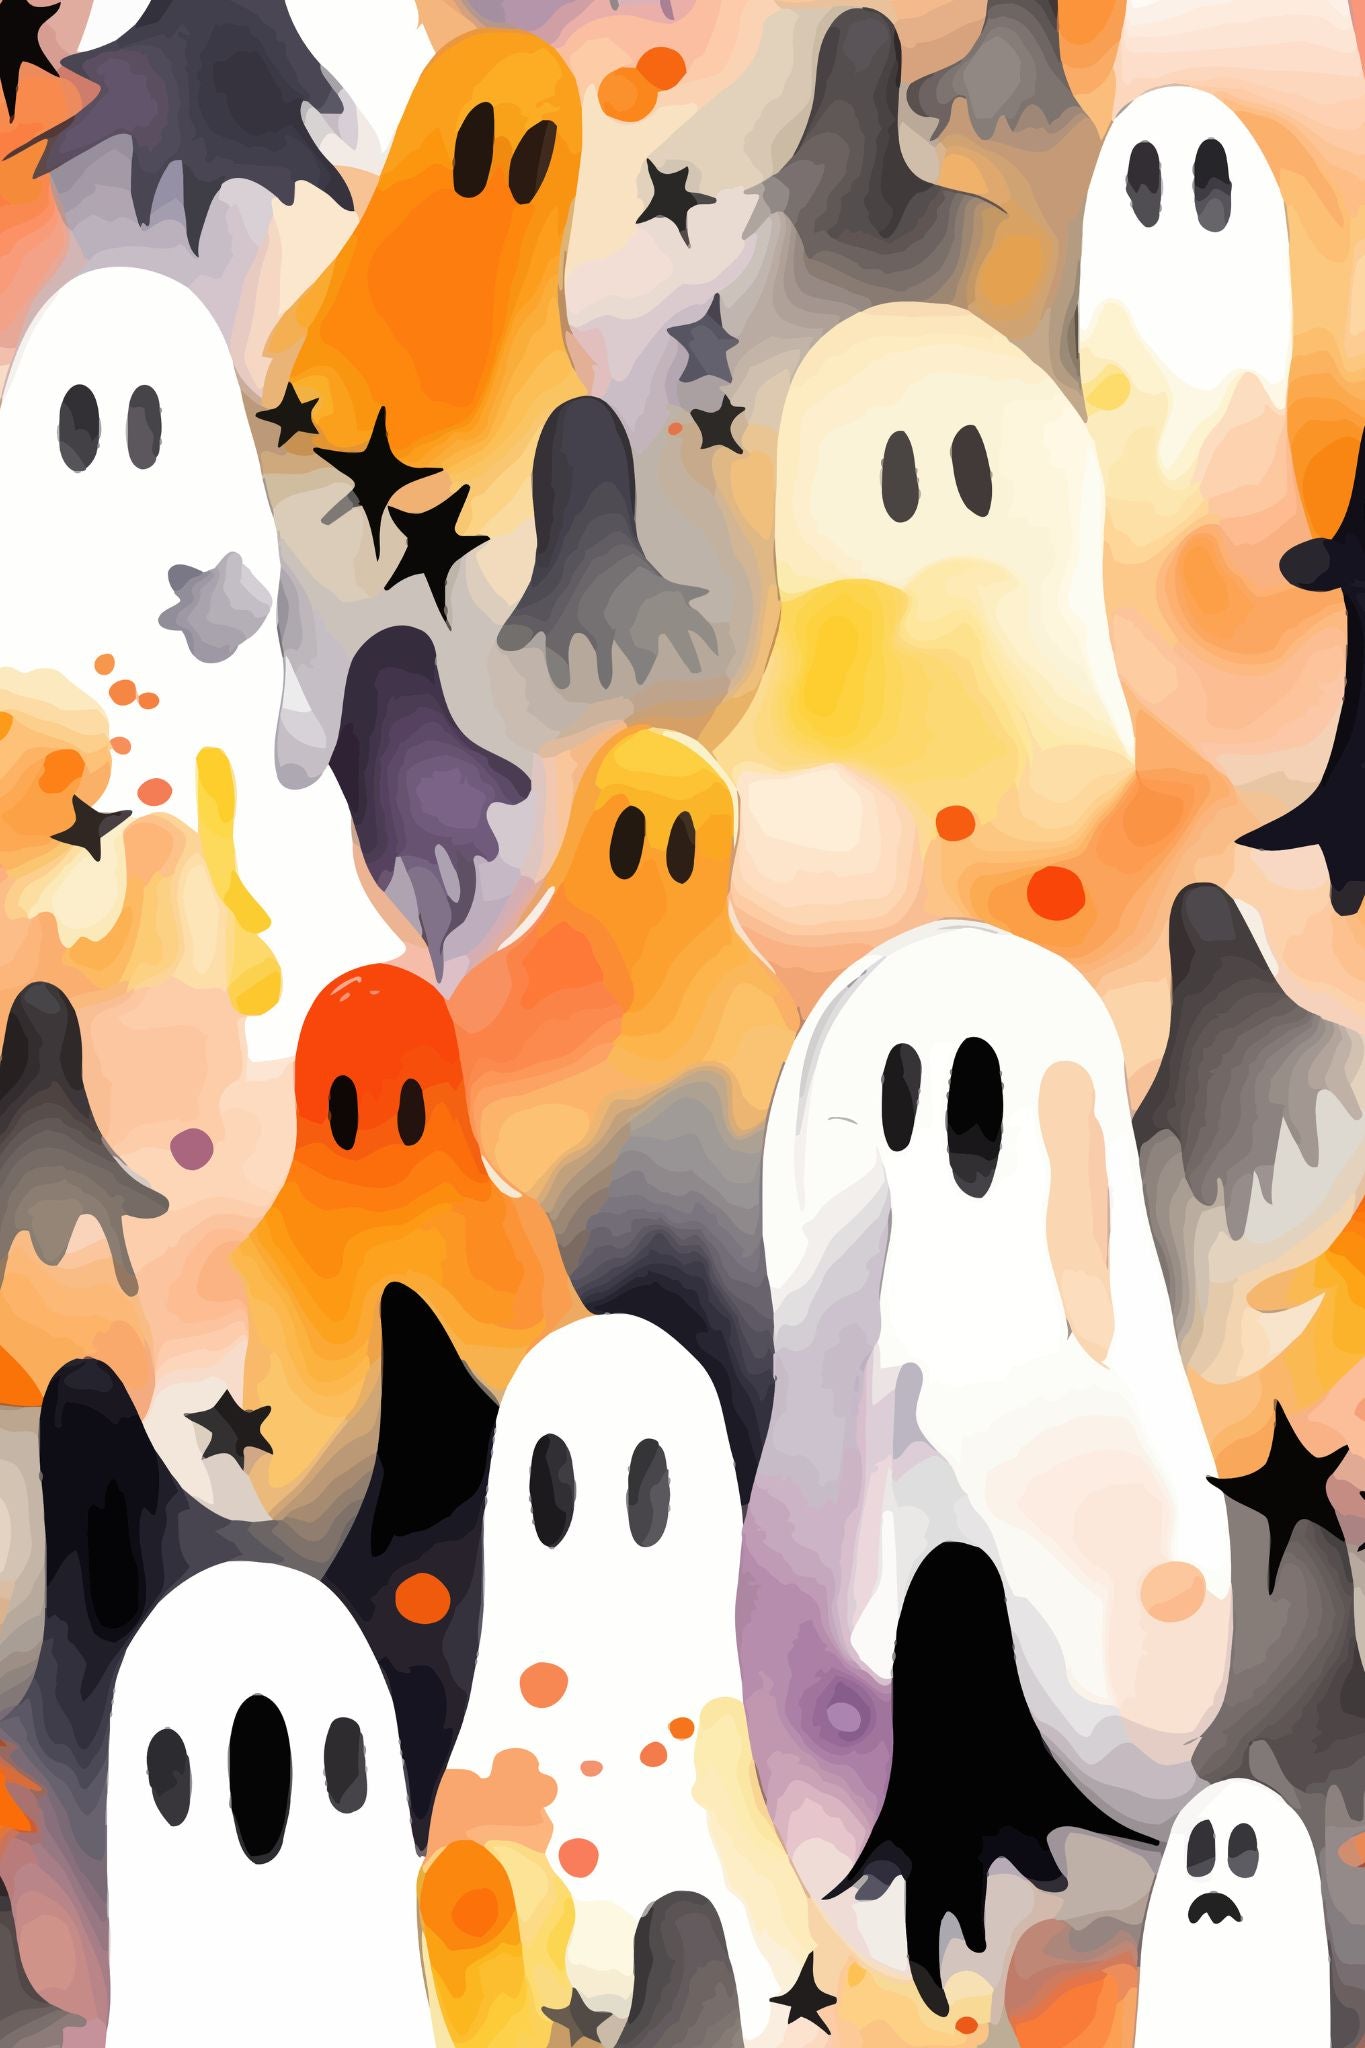 Creepy og kult halloweenkort. Motiv er i cartoon og forestiller spøkelser